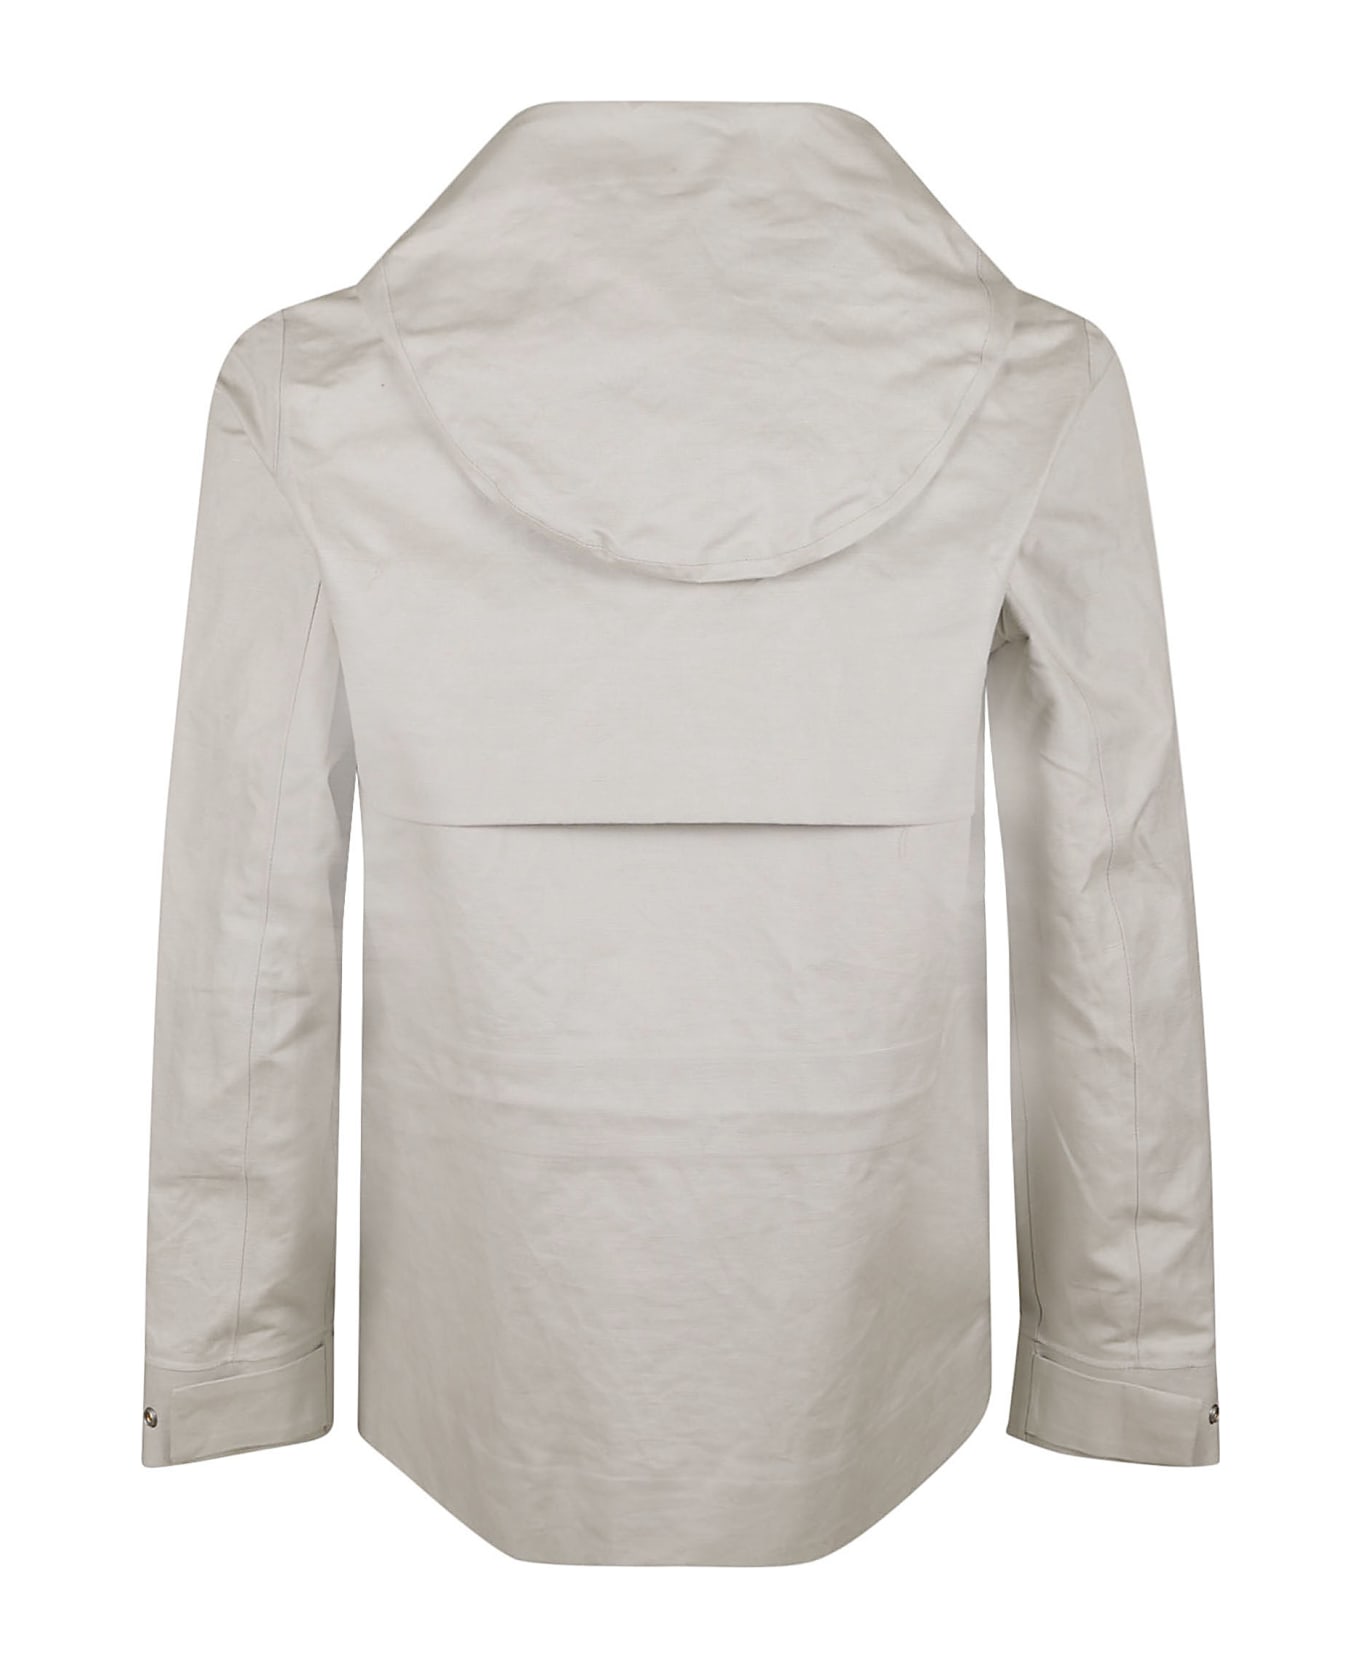 K-Way Erhal Linen Blend Jacket - Beige/Silver ジャケット